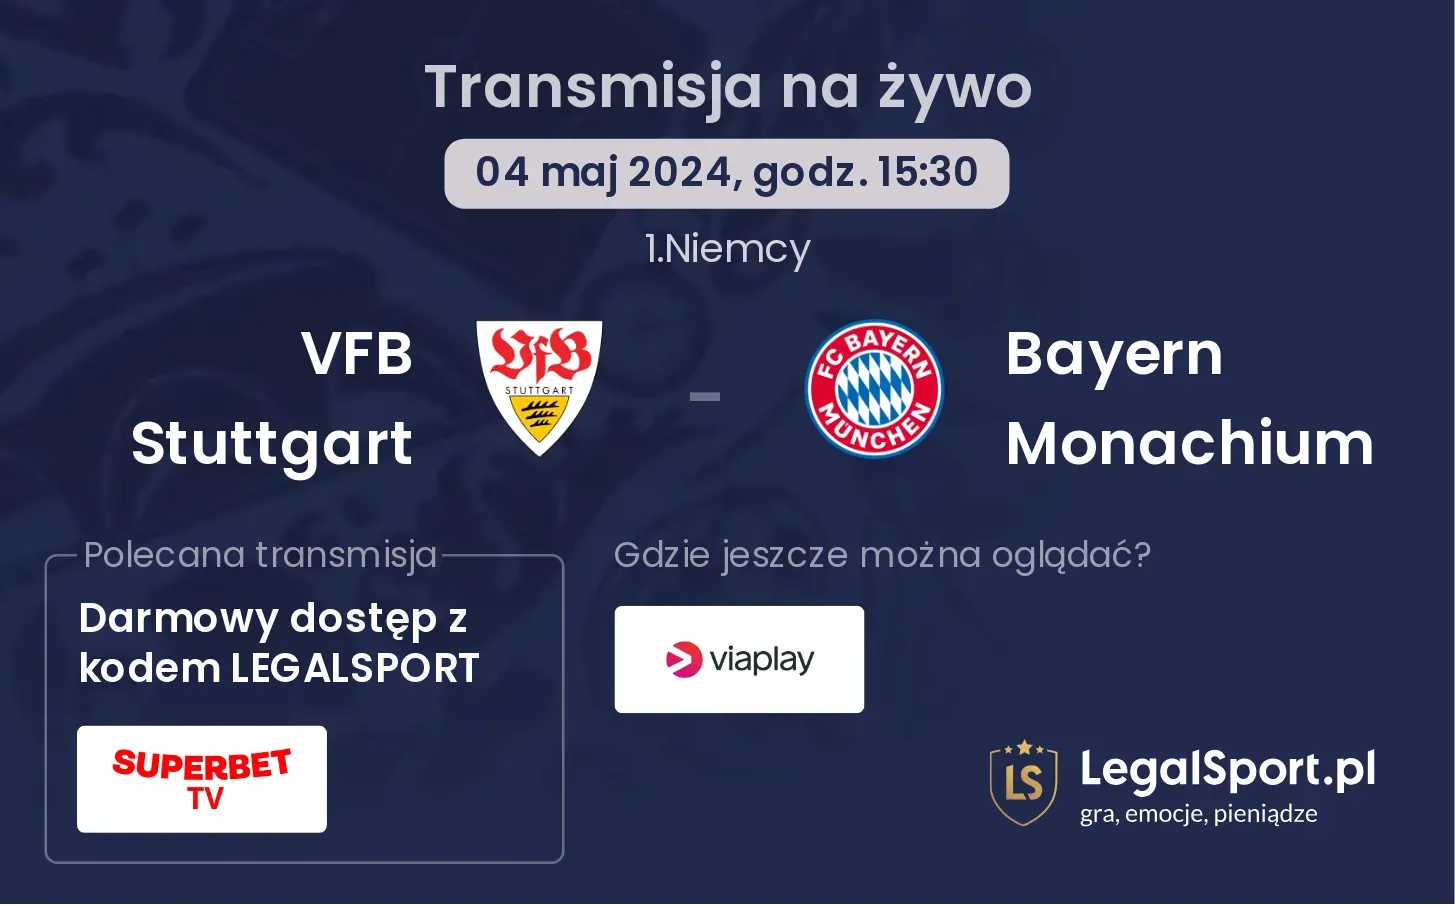 VFB Stuttgart - Bayern Monachium transmisja na żywo